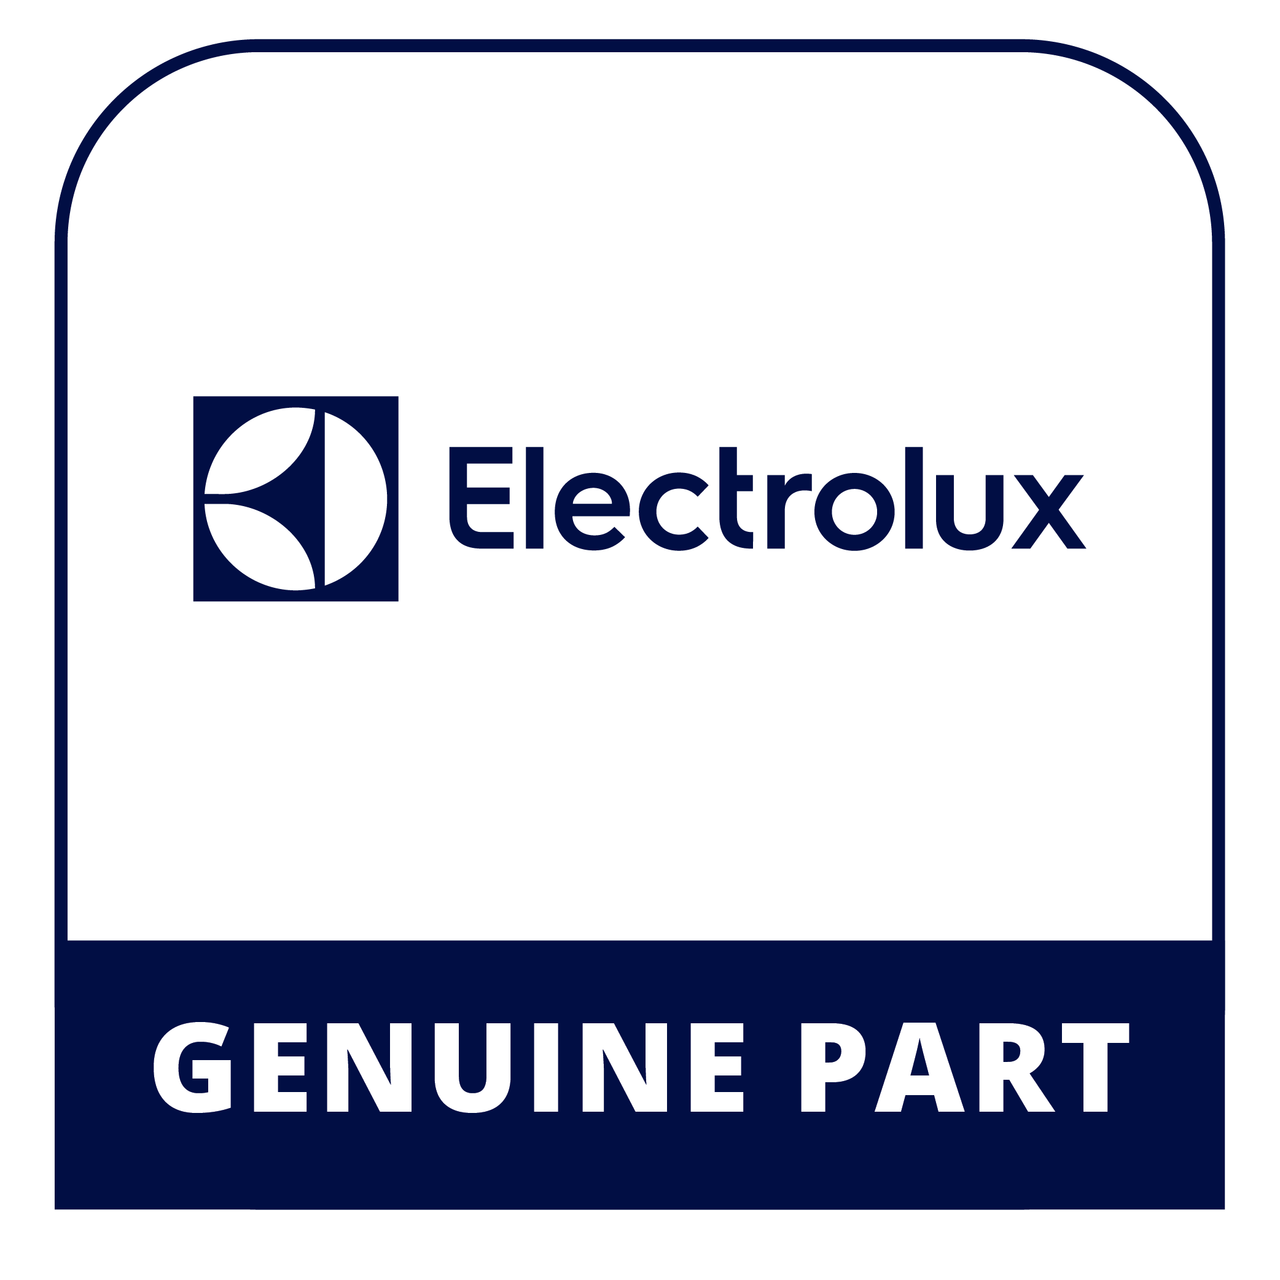 Frigidaire - Electrolux 218835601 - Cover - Genuine Electrolux Part